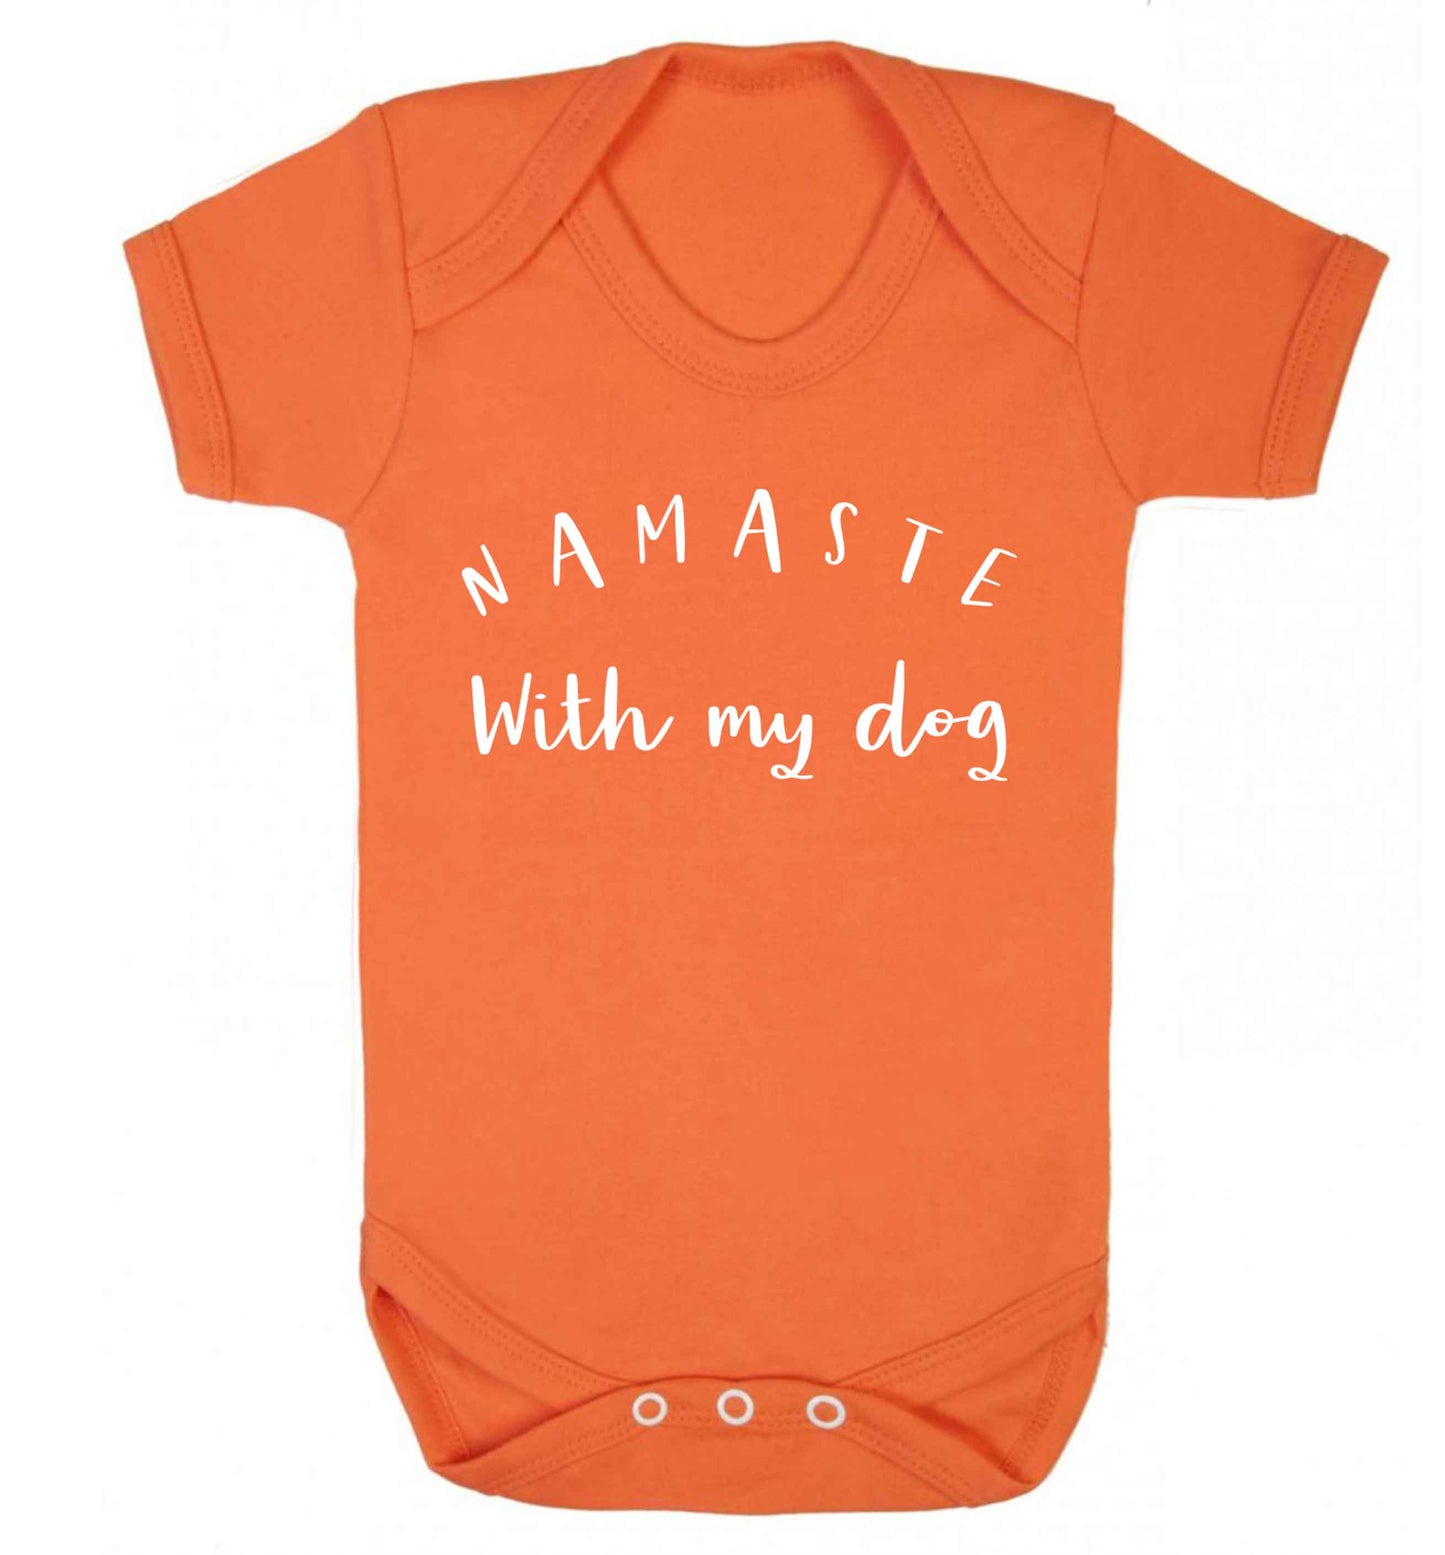 Namaste with my dog Baby Vest orange 18-24 months